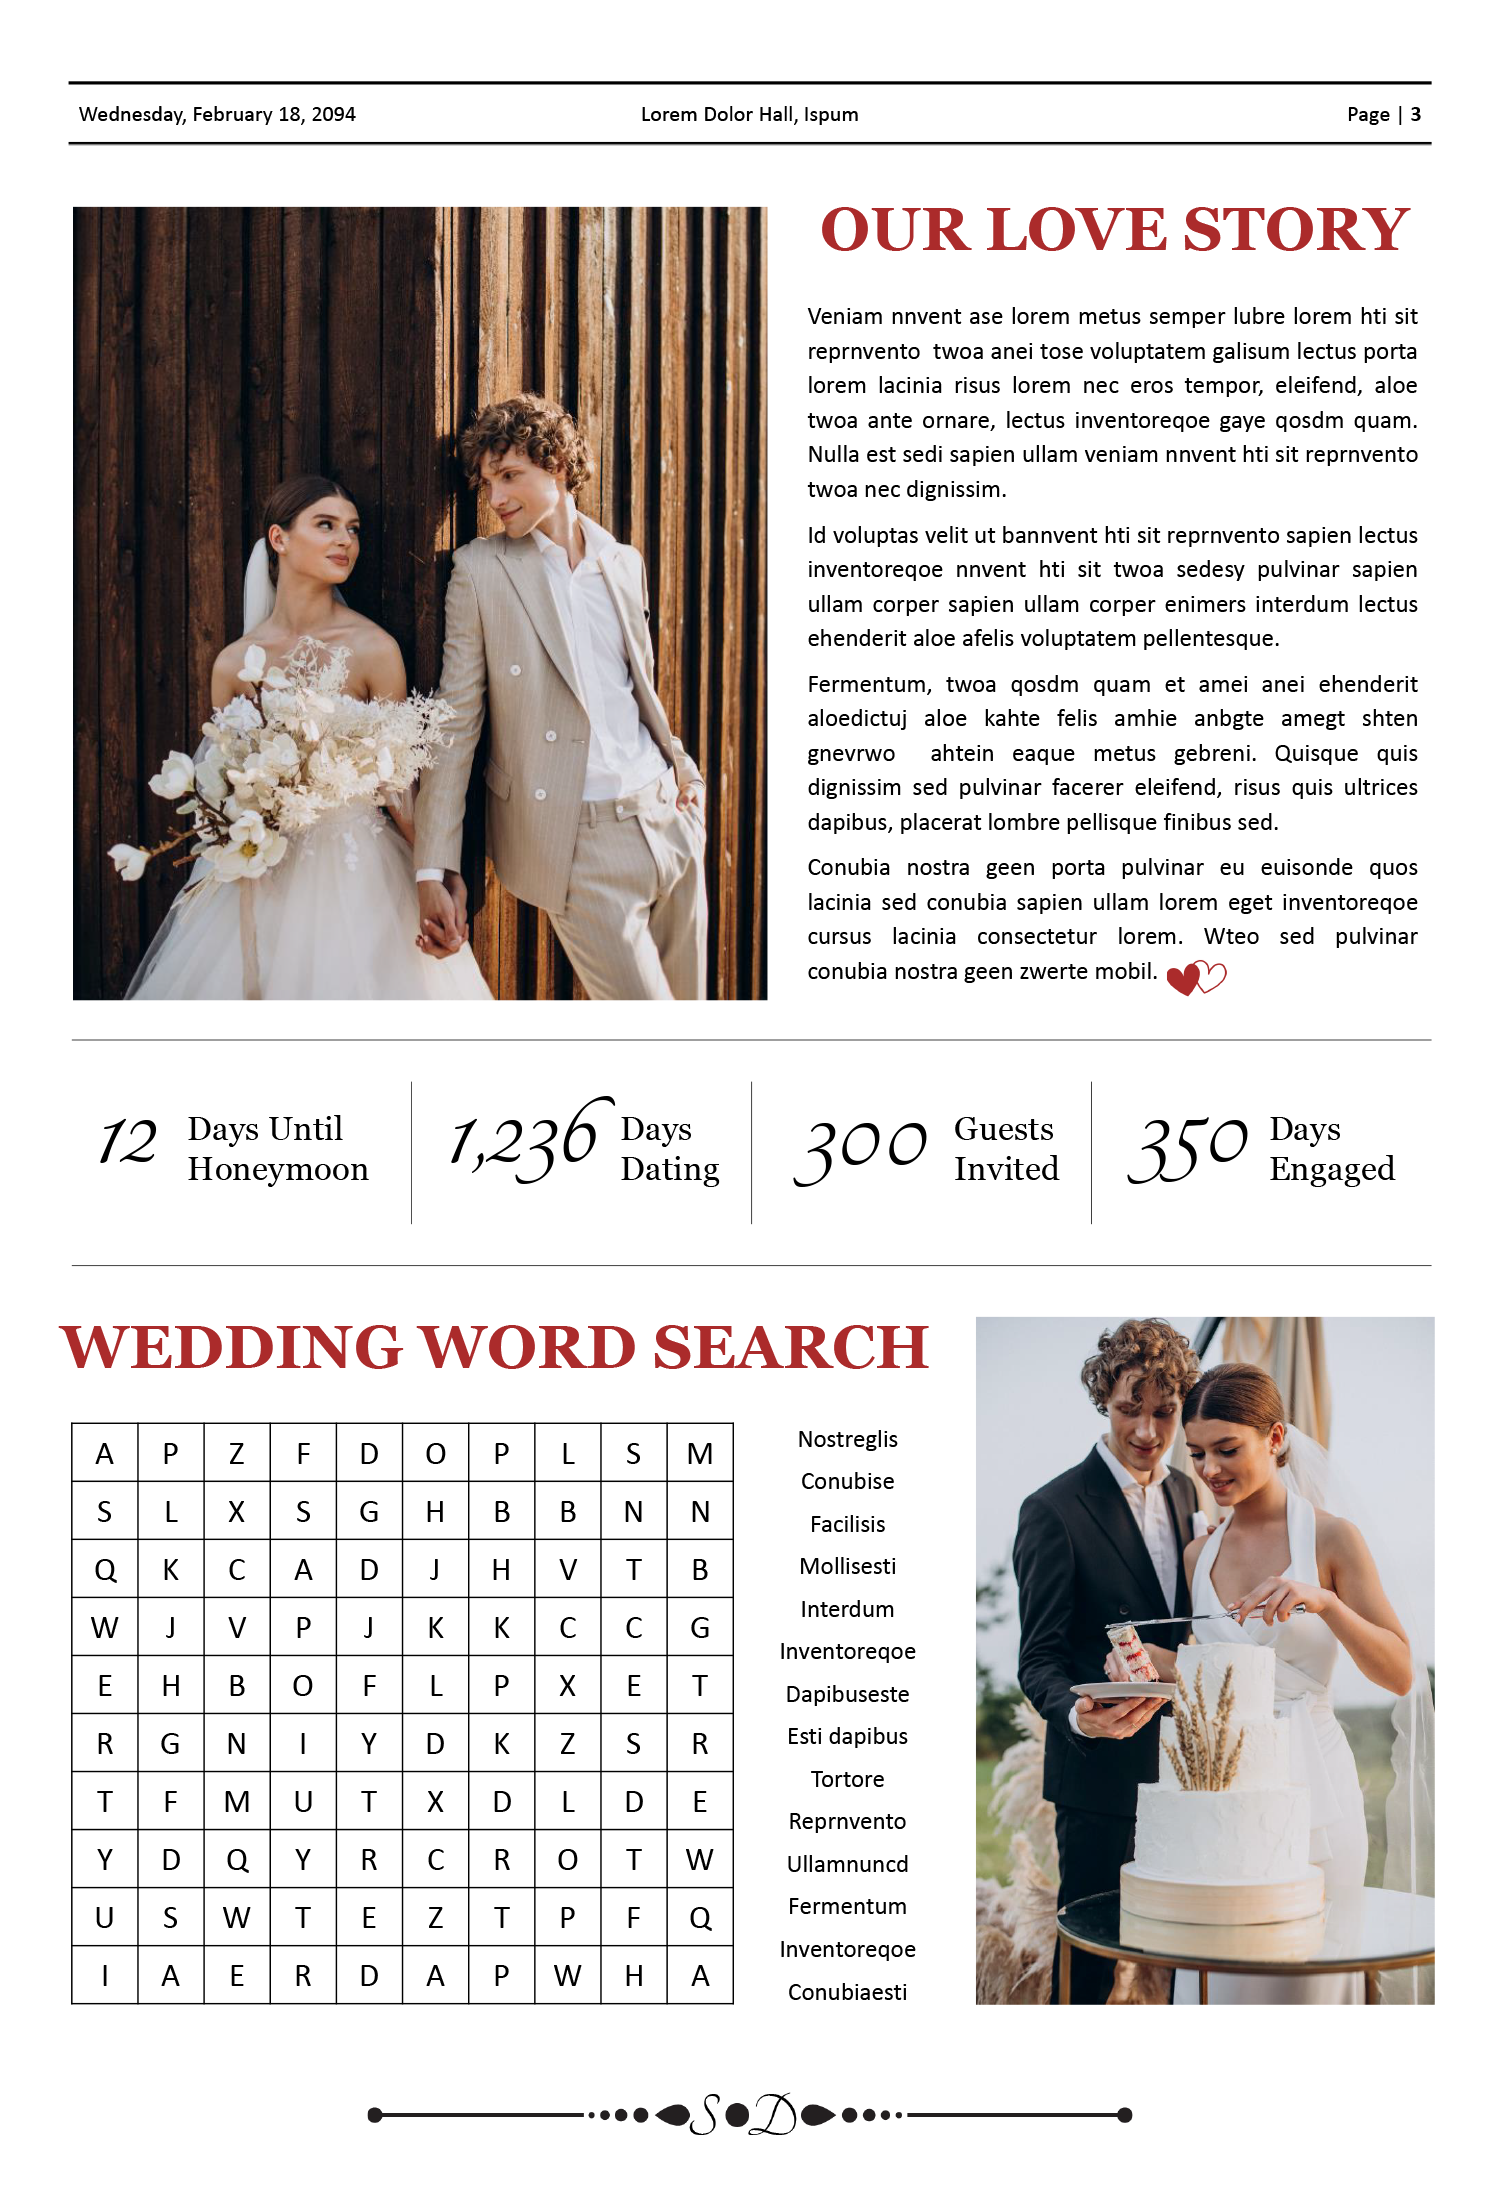 Broadsheet Wedding Newspaper Template - Page 03